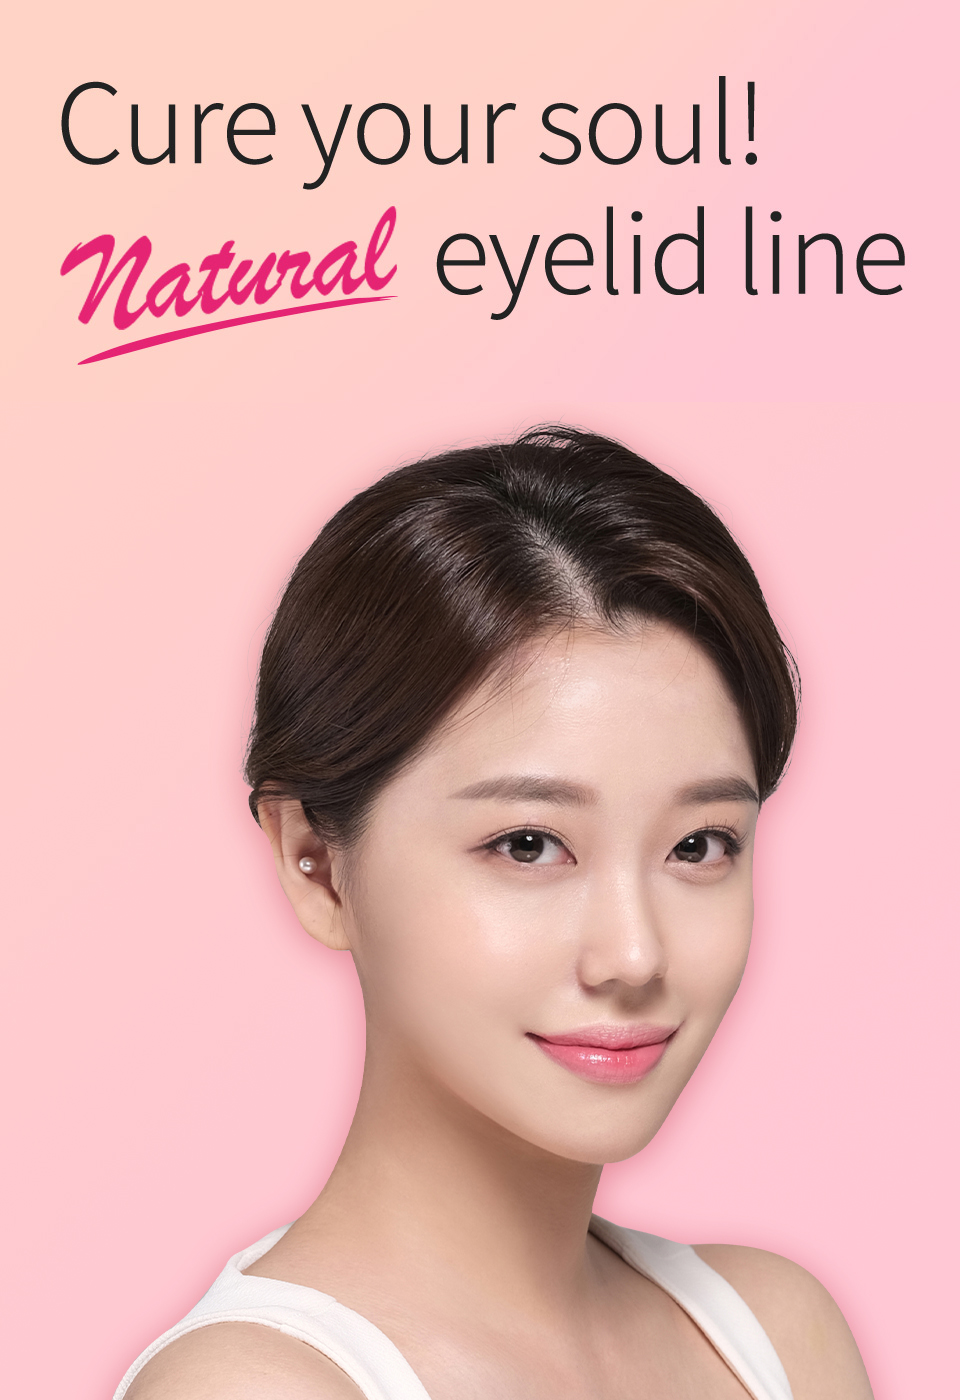 Cure your soul! Natural eyelid line